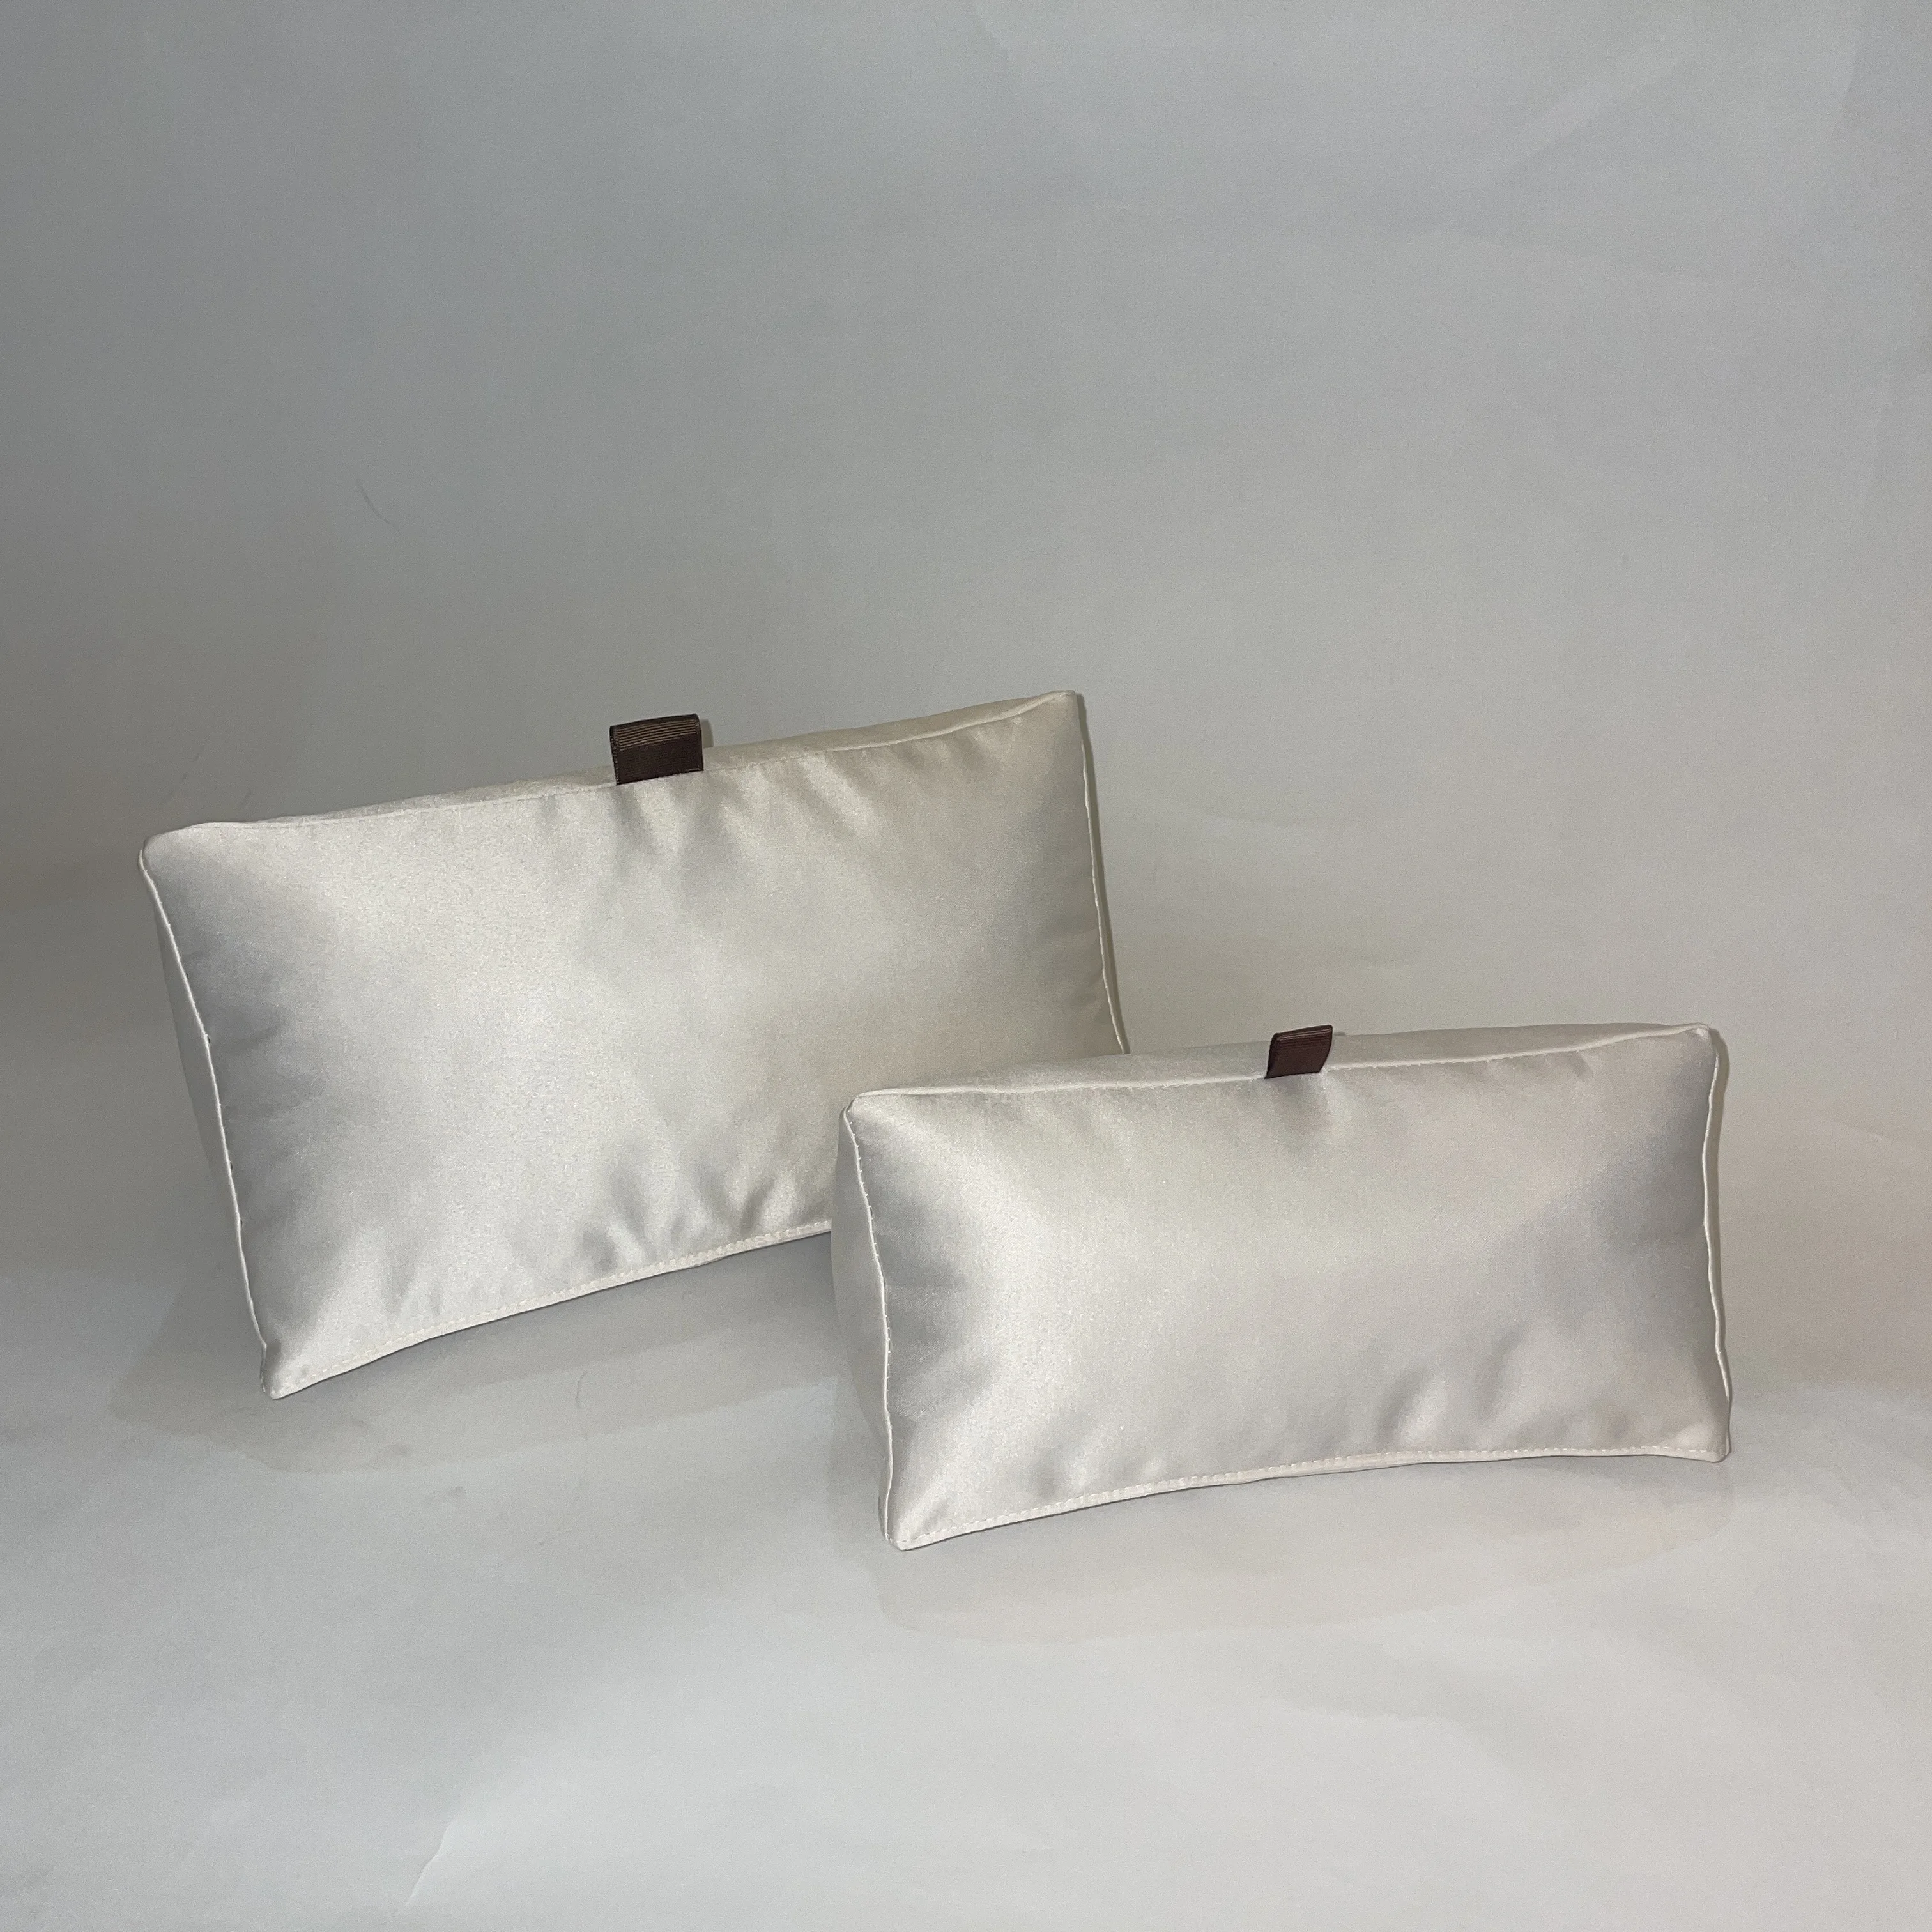  Bag-a-Vie Purse Shaper Pillow Insert - Champagne - Luxury  Handbag Shaper Insert for Women's Purses - Handbag Custom Pillow Purse  Accessories for Birkin 35 : Clothing, Shoes & Jewelry